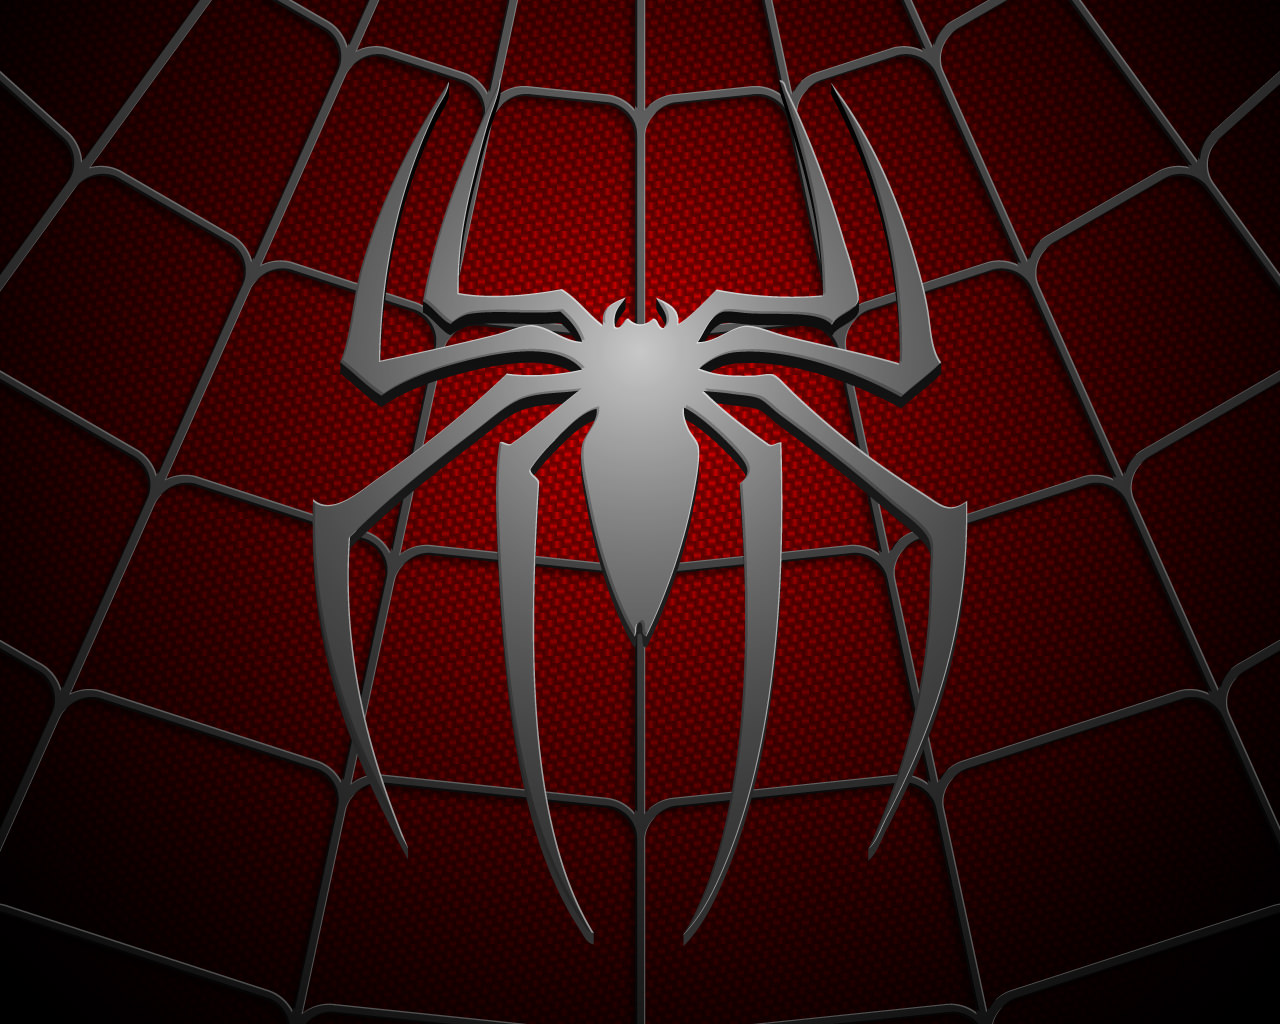 spiderman symbol wallpaper,rot,symmetrie,spinne,spider man,wirbellos